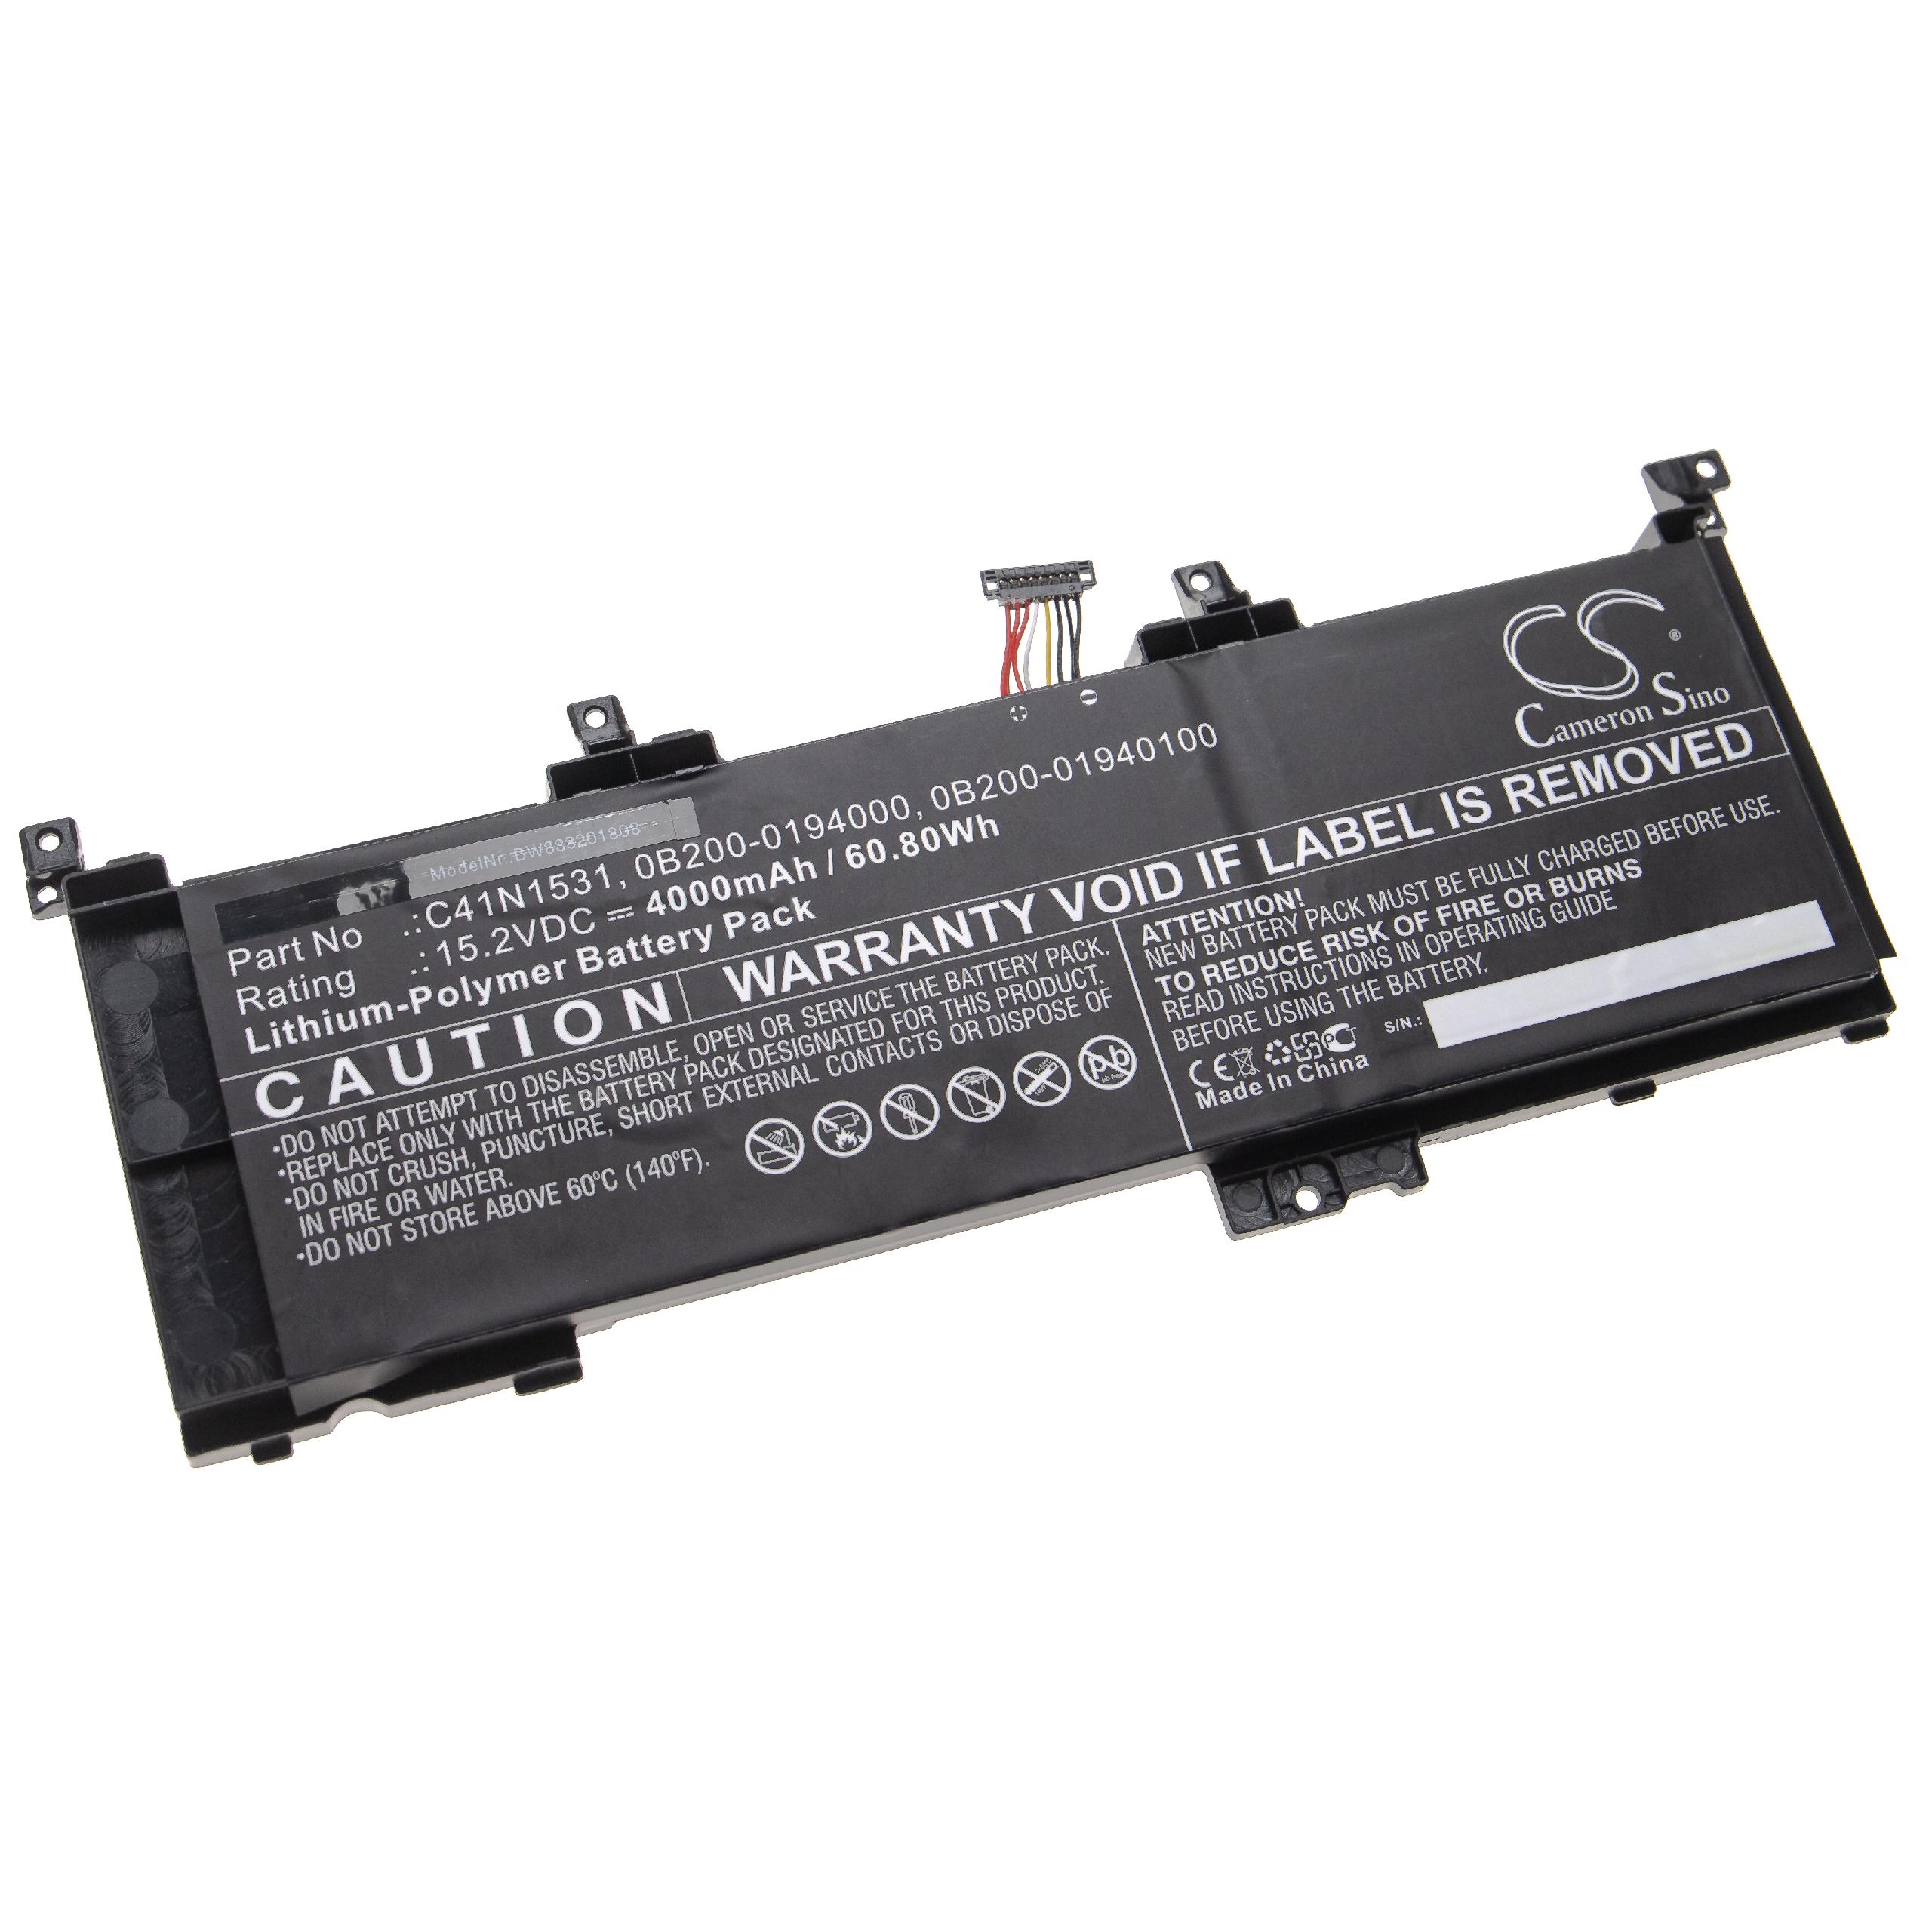 Notebook Battery Replacement for Asus 0B200-0194000, 0B200-01940100, C41N1531 - 4000mAh 15.2V Li-polymer